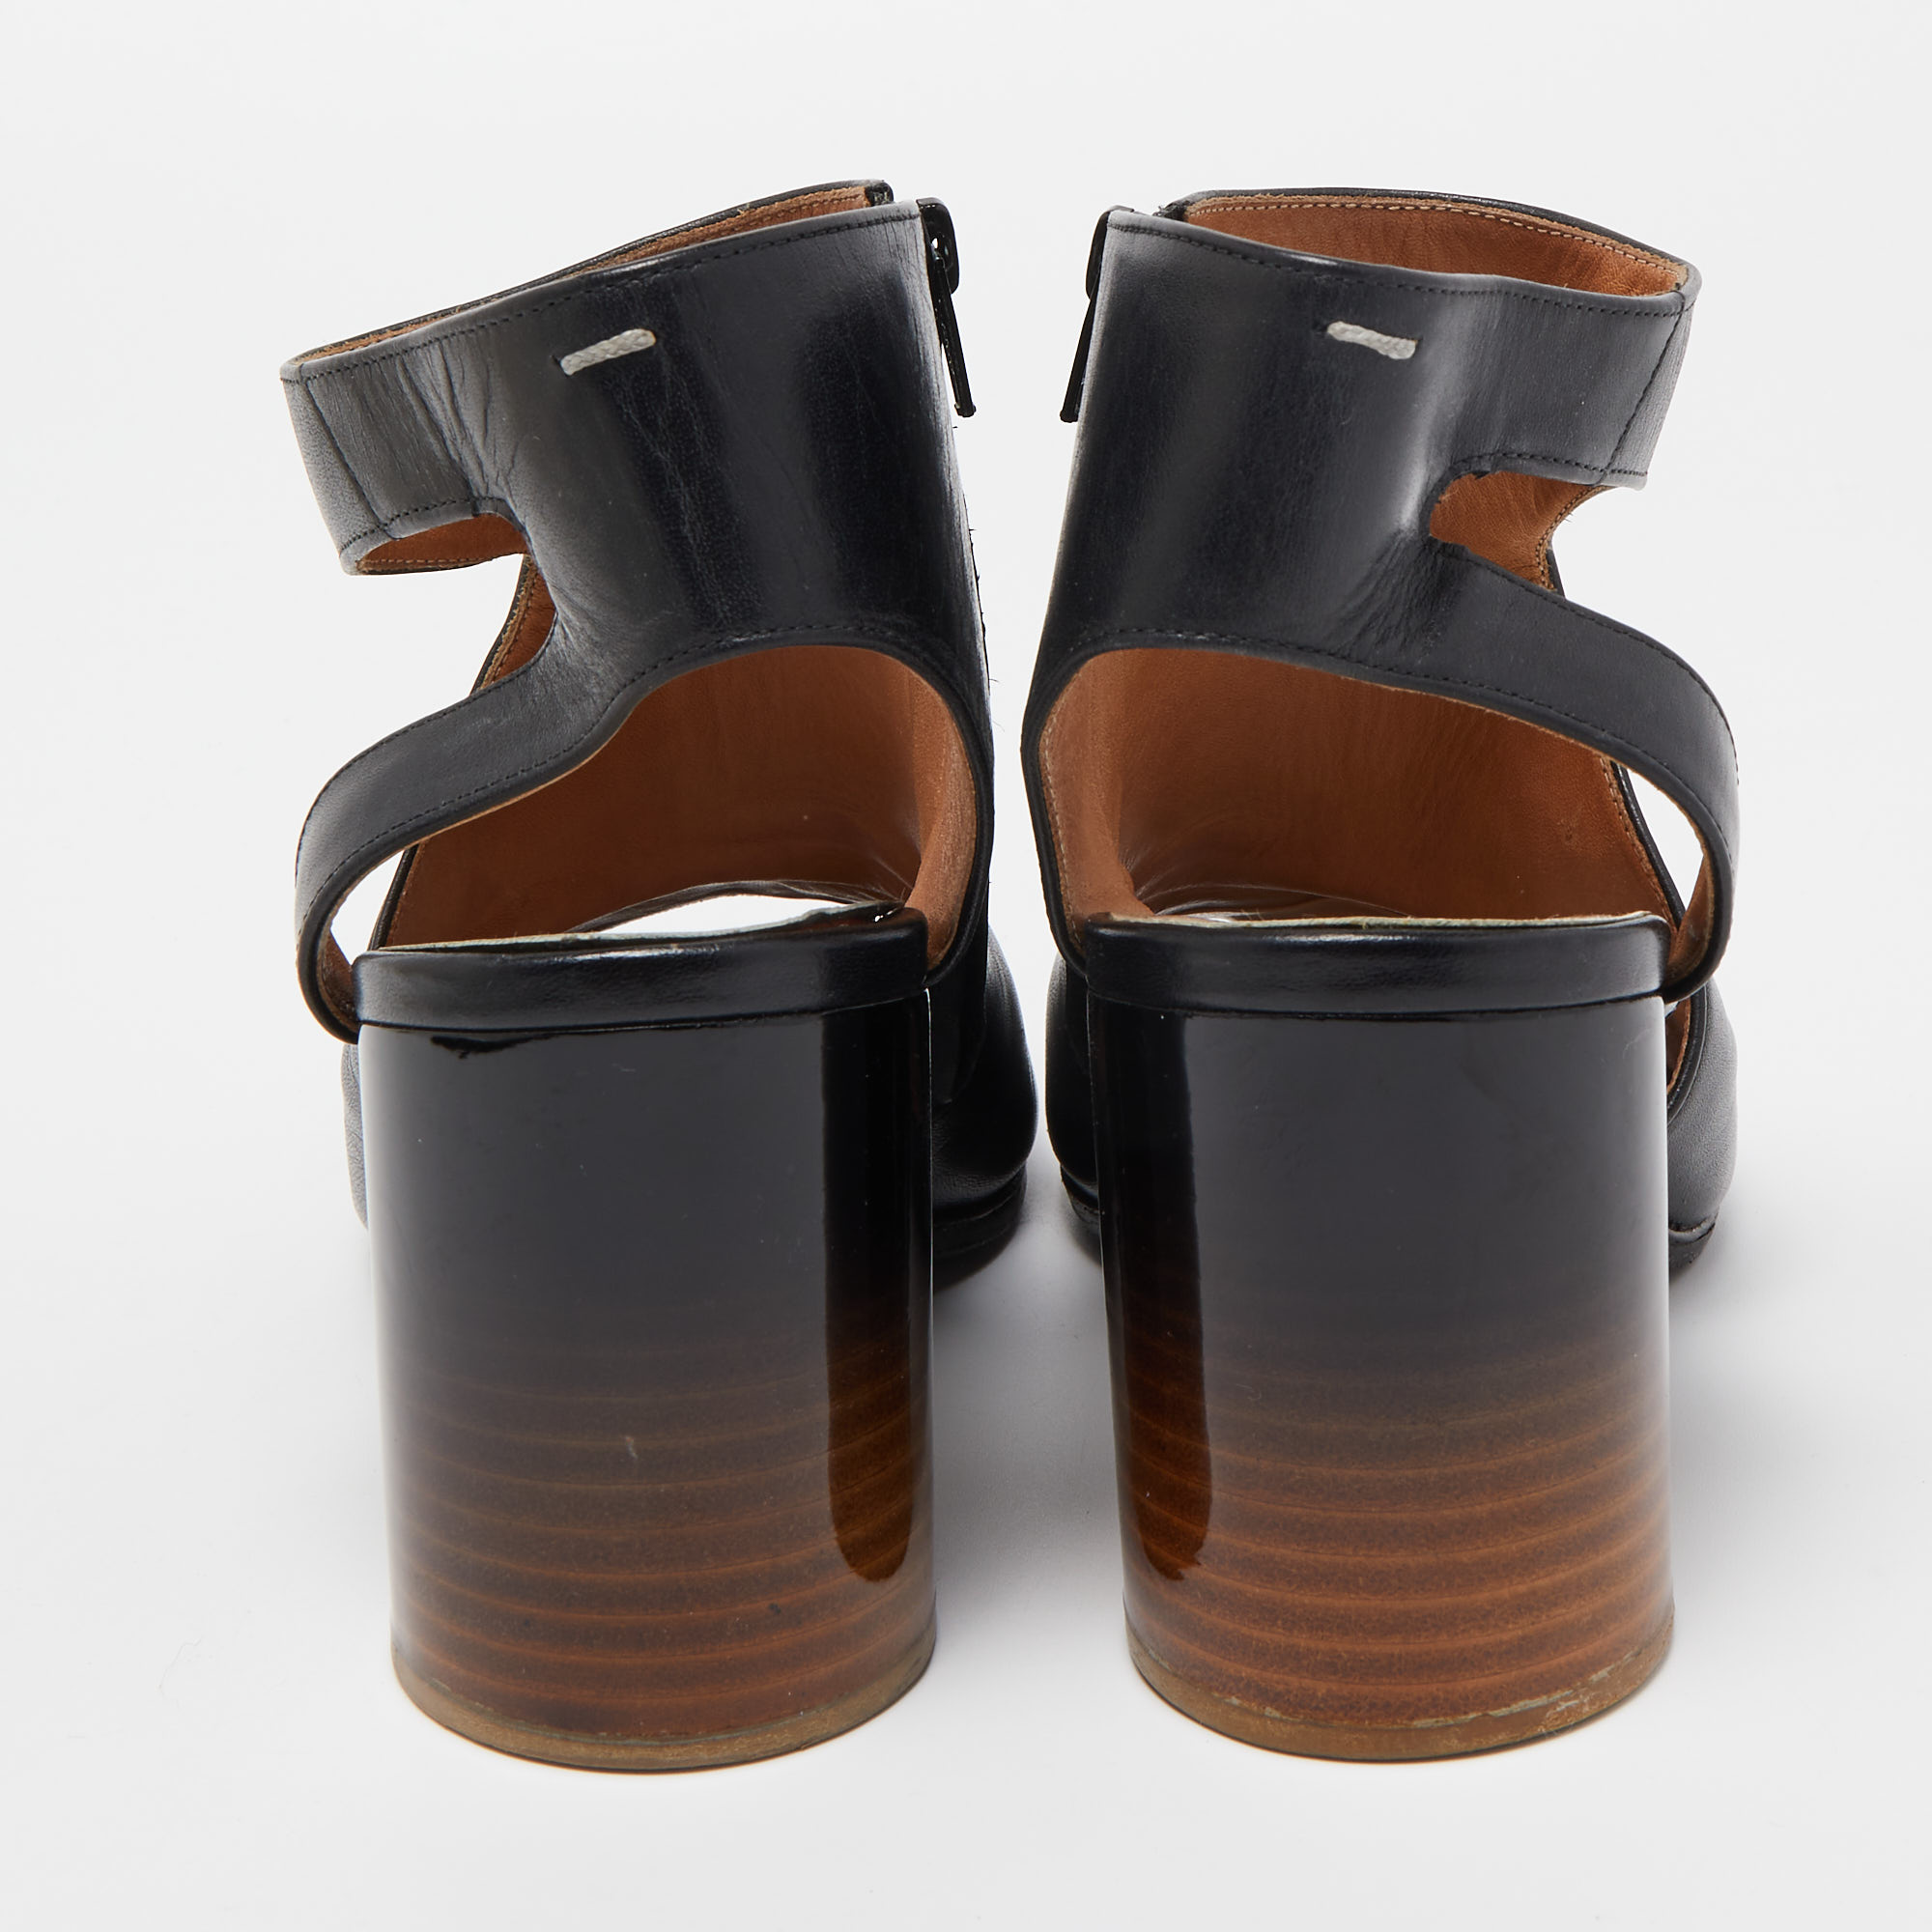 Maison Martin Margiela Black Leather Open Toe Sandals Size 37